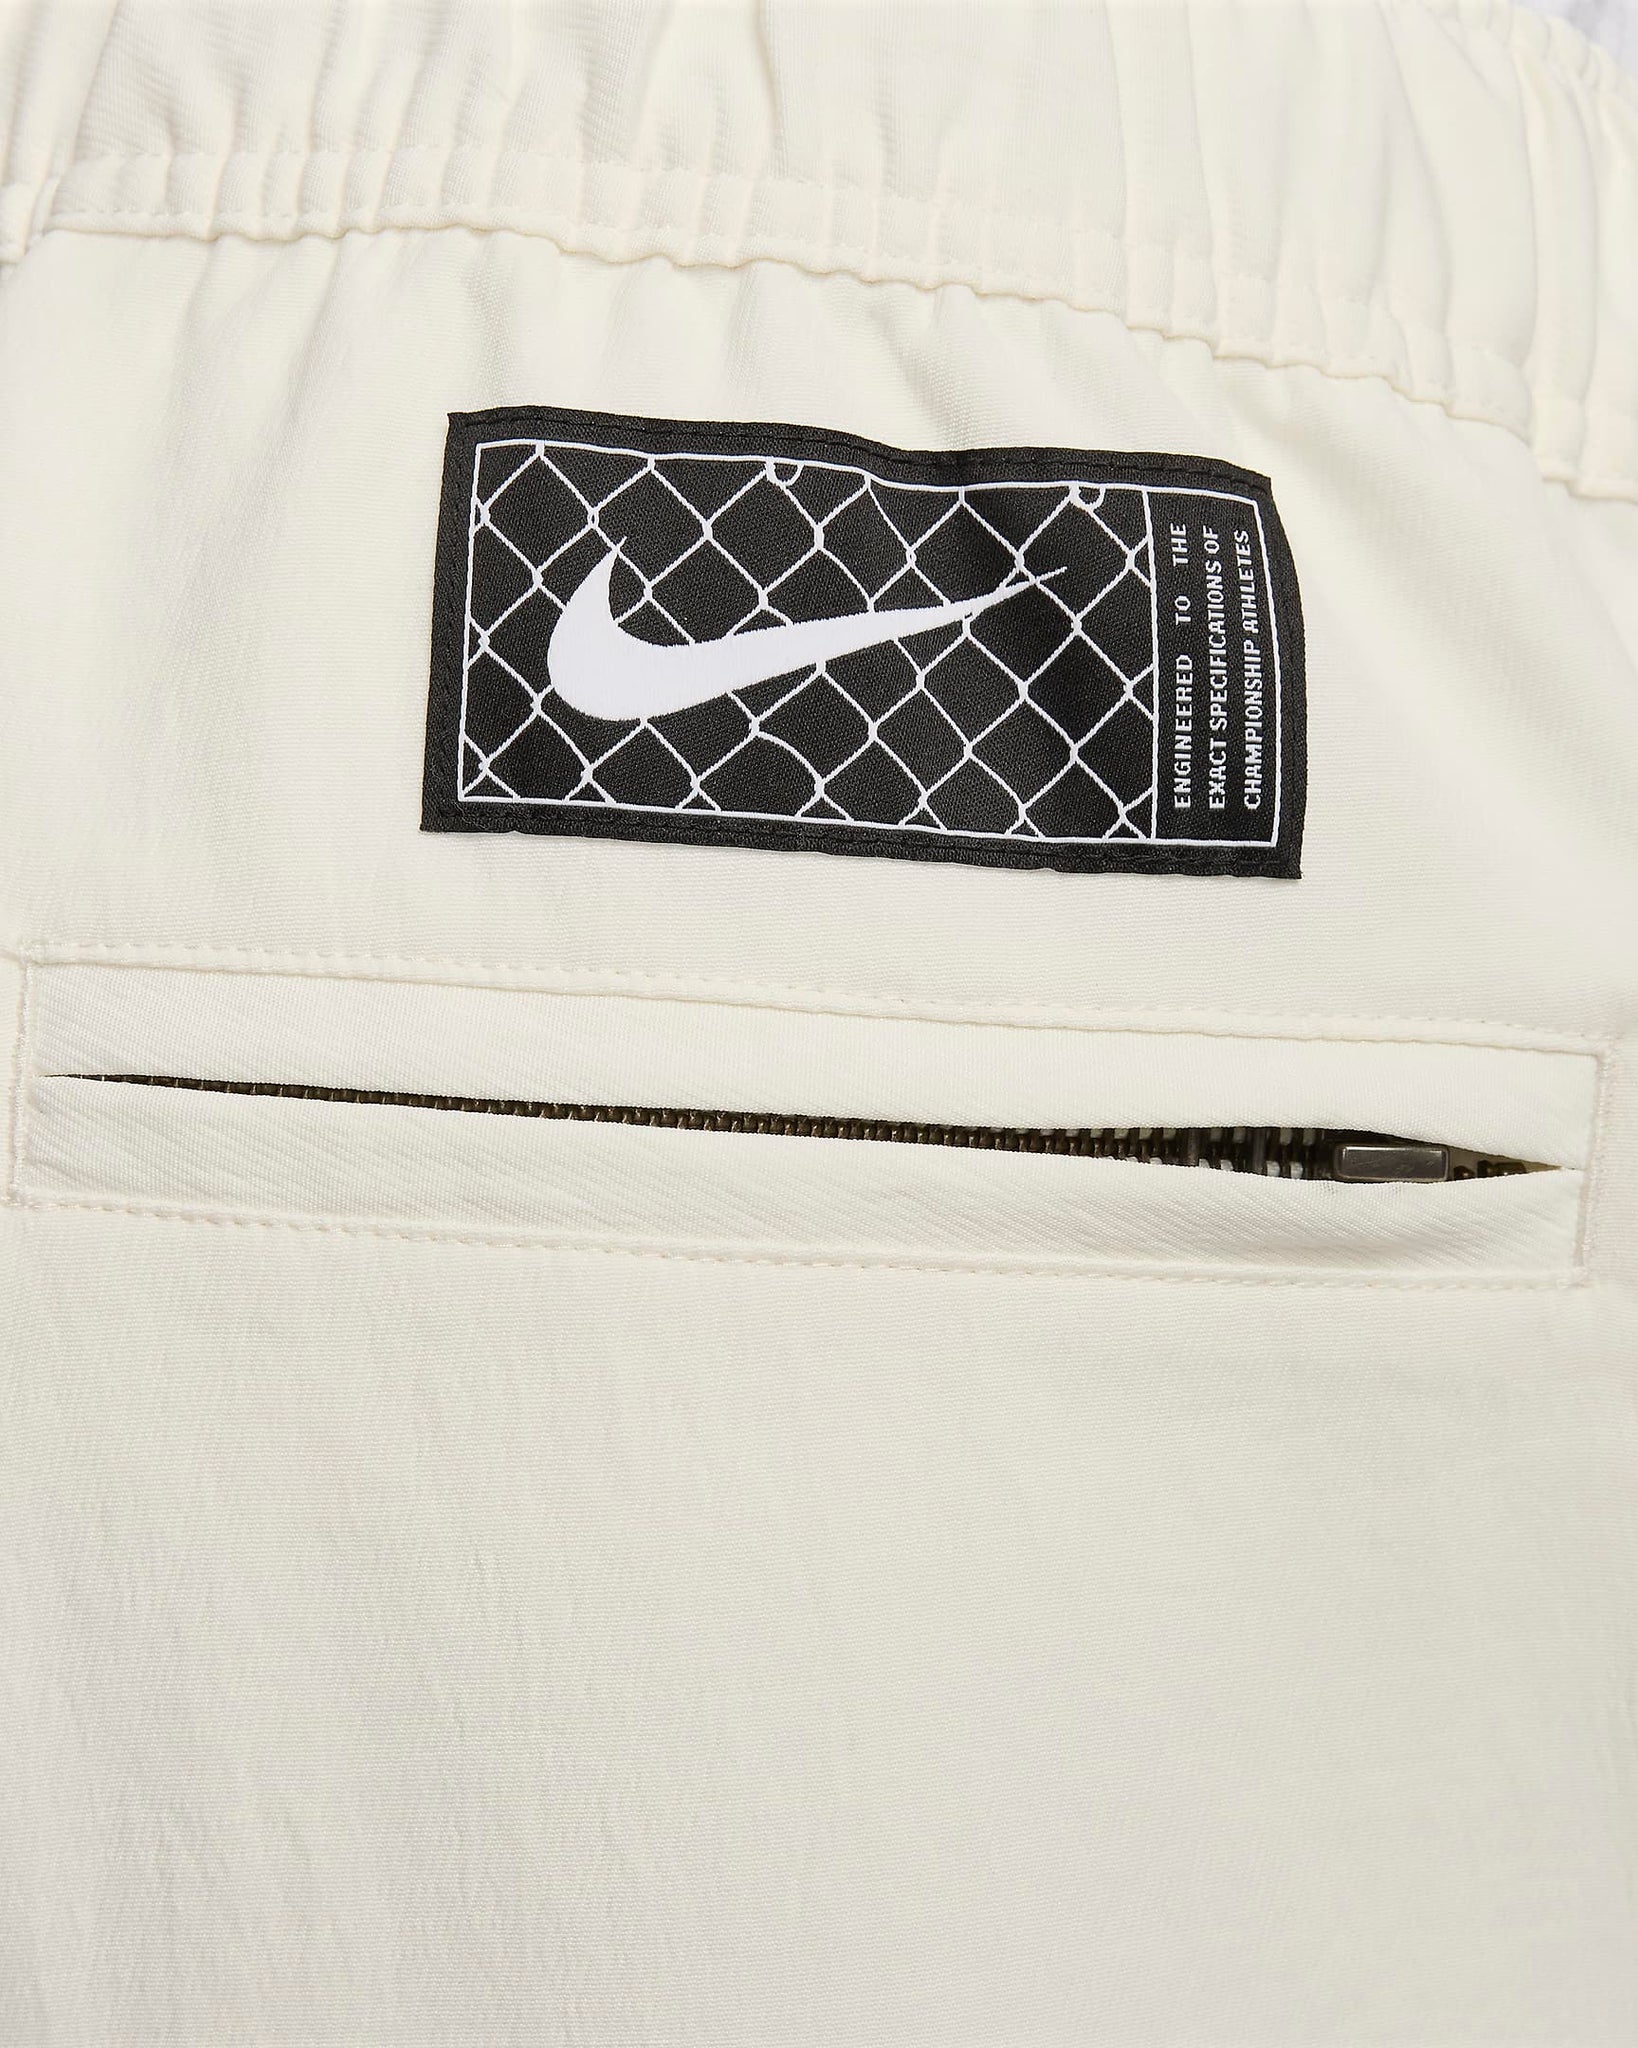 Devin Booker Nike Men's Tearaway Basketball Pants